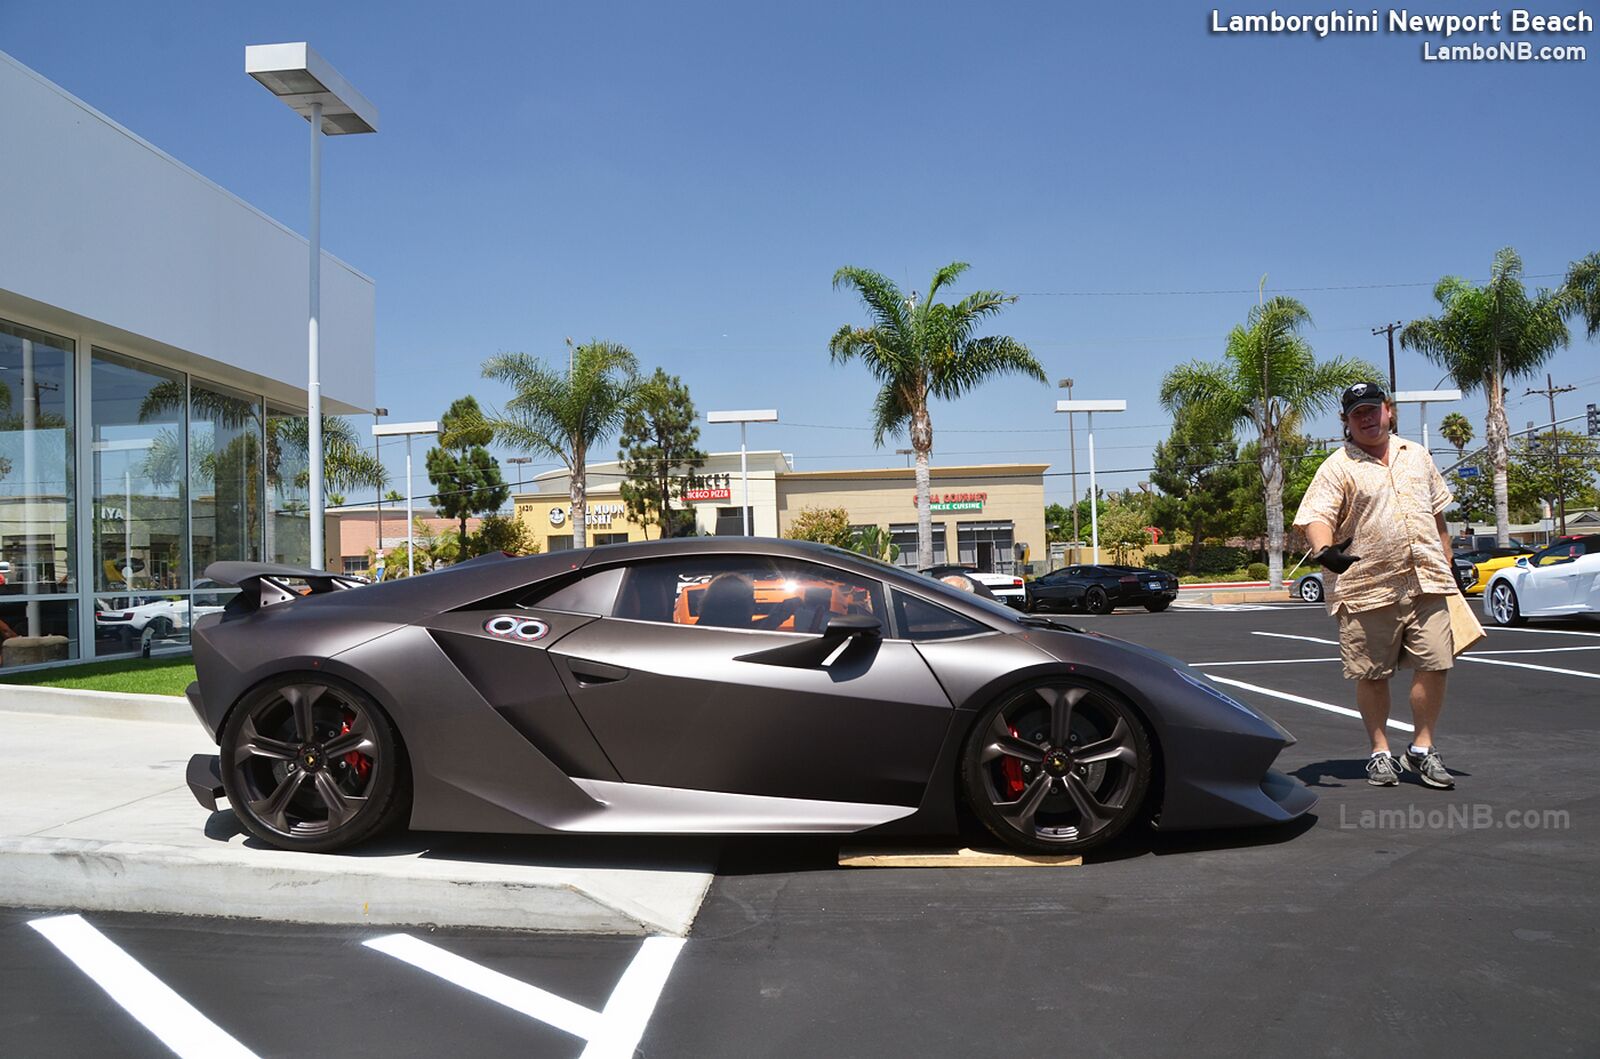 Lamborghini Sesto Elemento Arrives at Lamborghini Newport Beach Photo 11